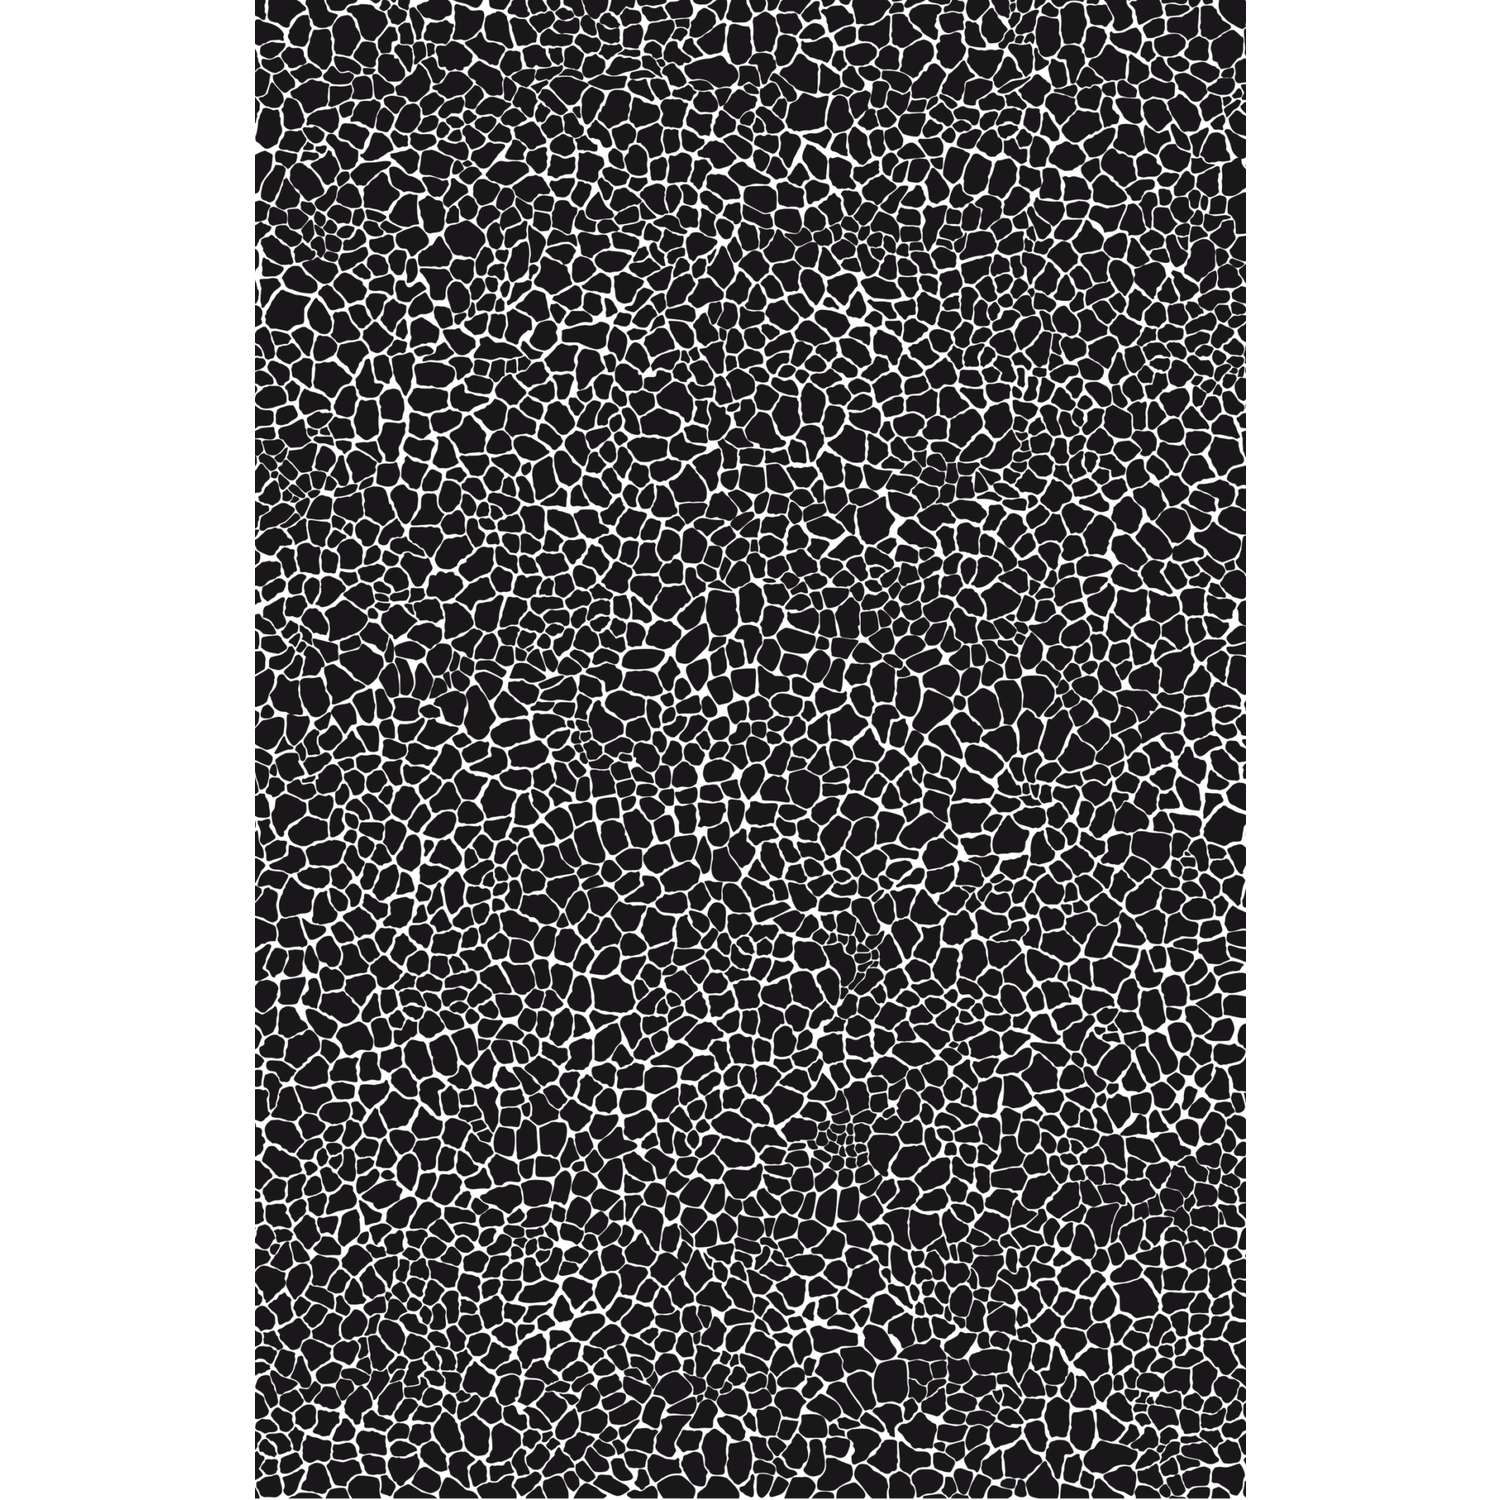 429 3er Pack schwarz weiß zebra 40 x 30 cm Decopatch Papier No